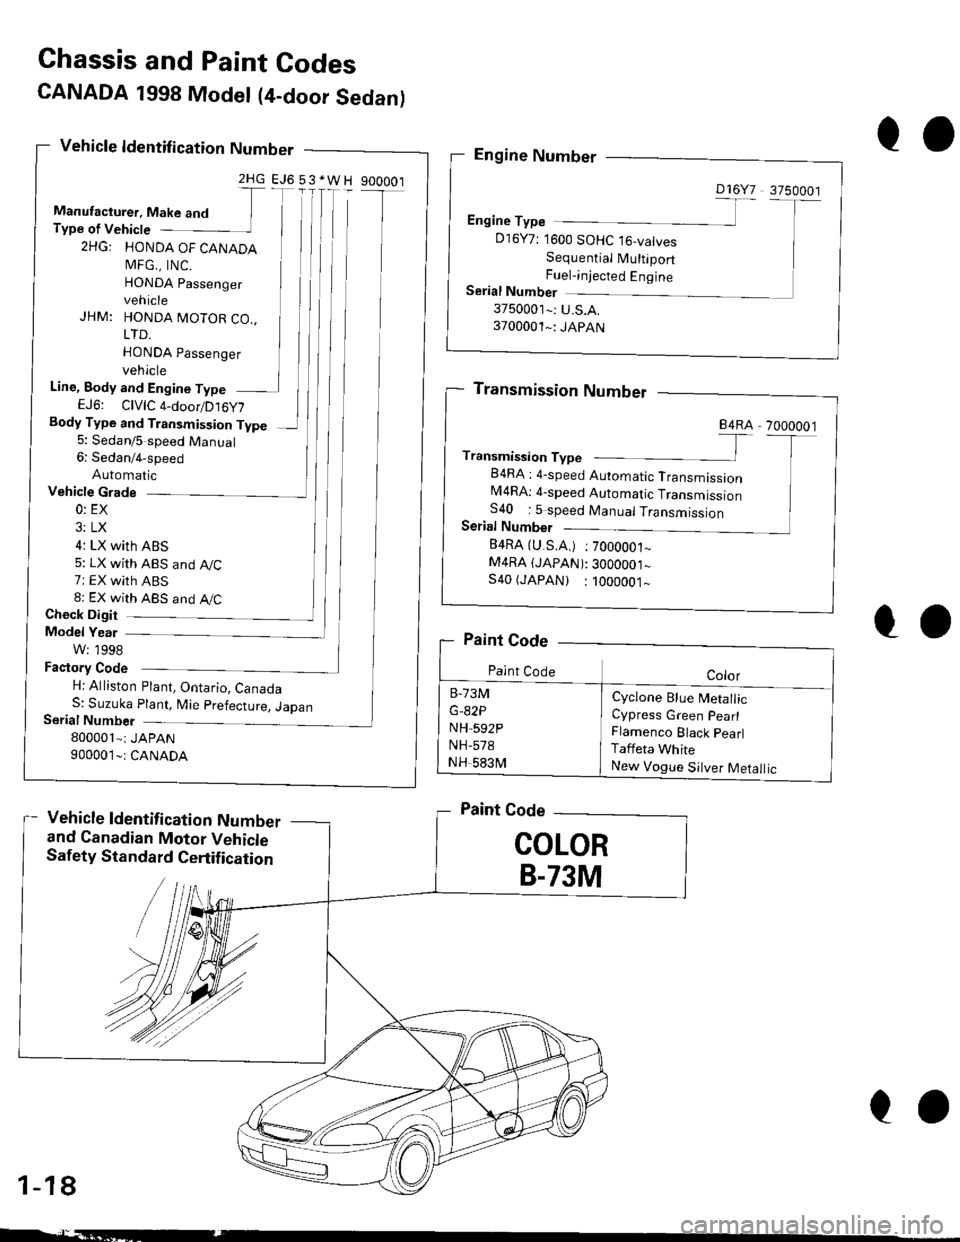 HONDA CIVIC 1996 6.G User Guide CANADA 1998 Model (4-door Sedanl
Vehicle ldentification Number
Chassis and Paint Codes
2HG.I
Manufacturer, Make andType of Vehicte I2HG: HONDA OF CANADA ]MFG,, INC.
HONDA passenger lvehicle
JHM: HONDA